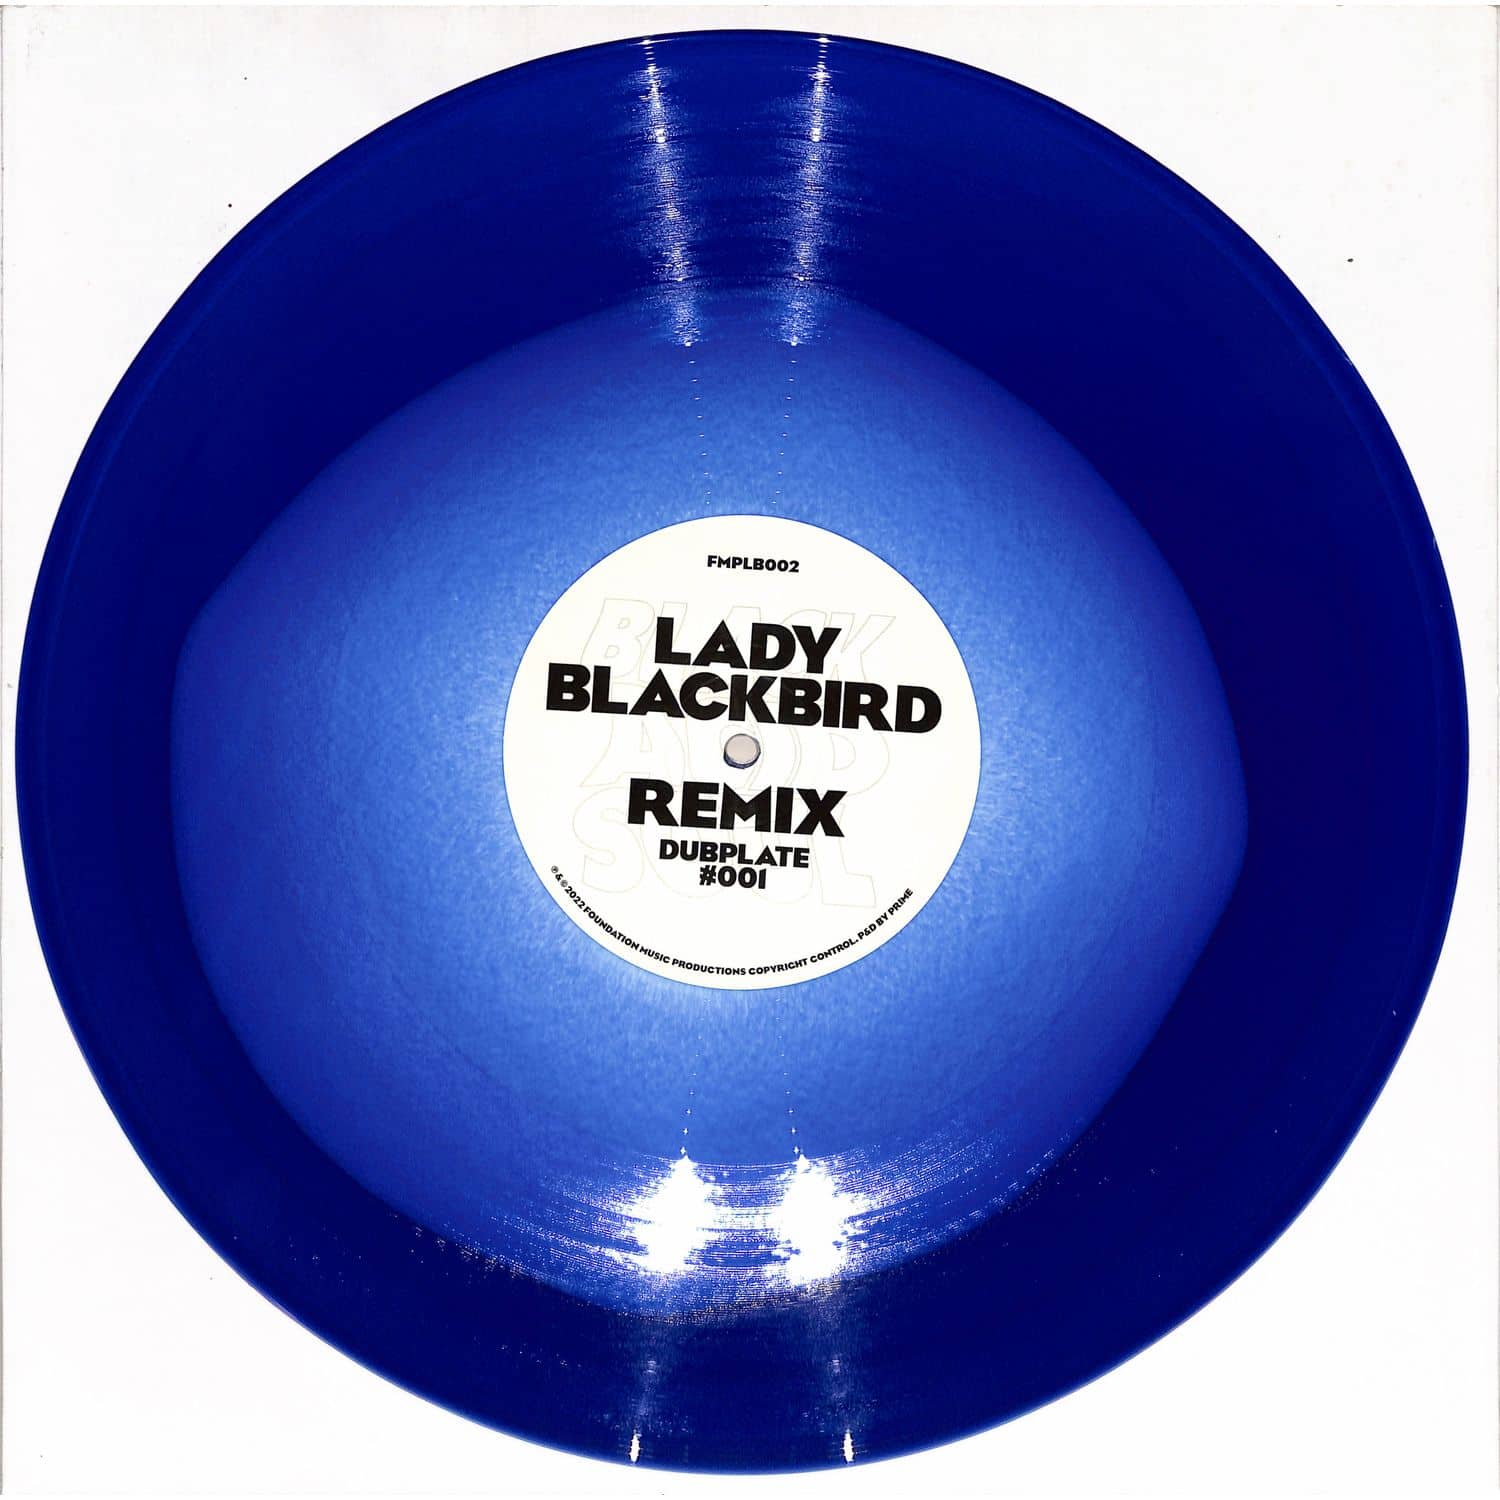 Lady Blackbird - REMIX DUBPLATE 001 